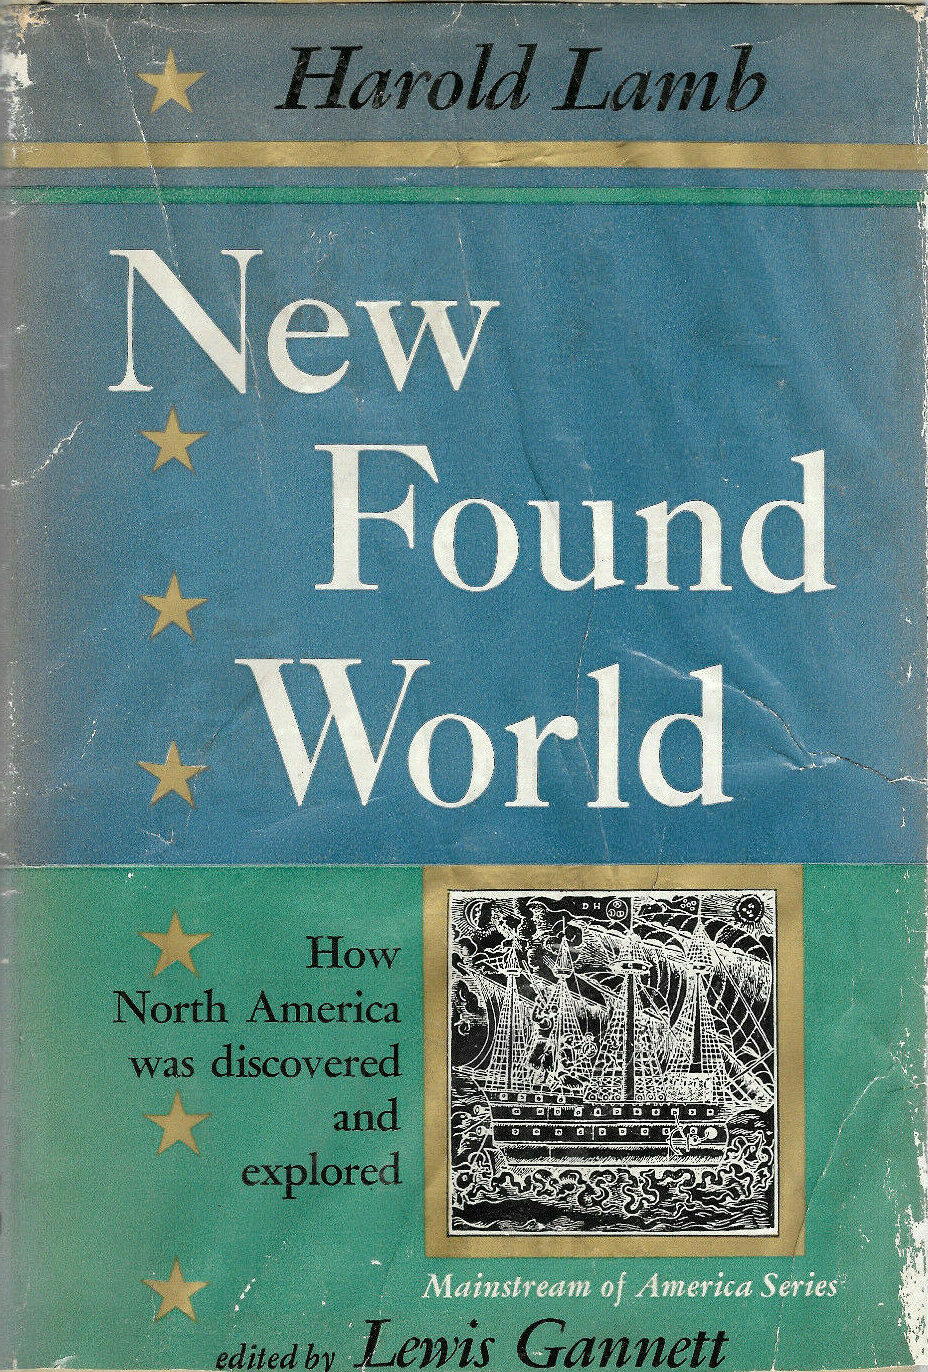 Image - New Found World by Harold Lamb